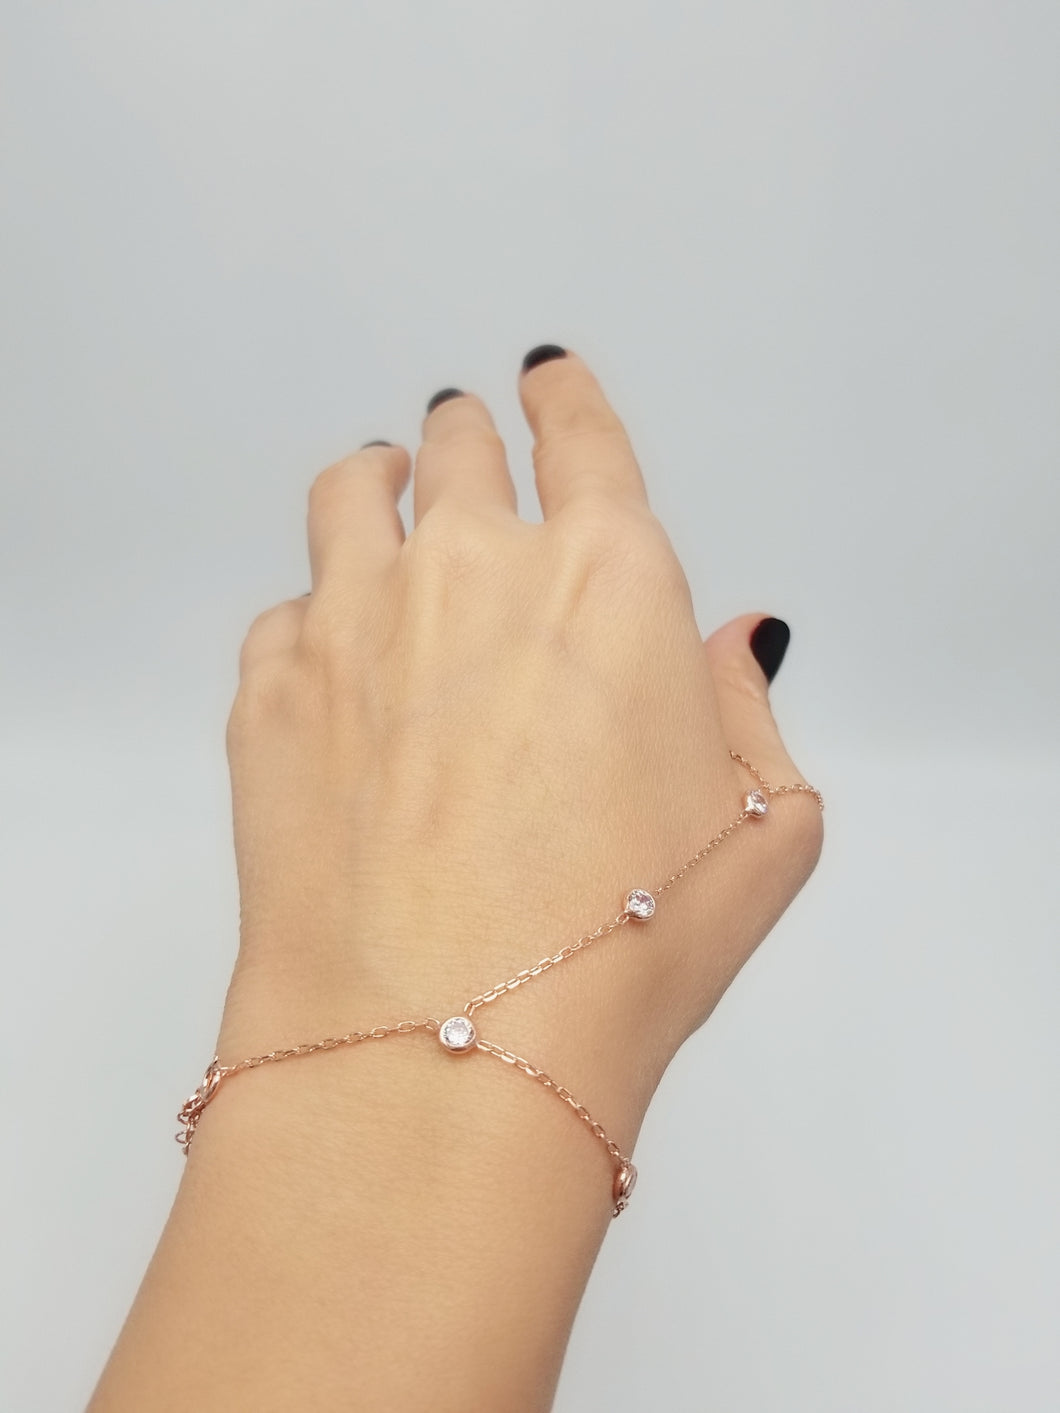 Clear Zircon Waterway Thumb Slave Bracelet Adjustable Hand Chain| 925 Sterling Silver